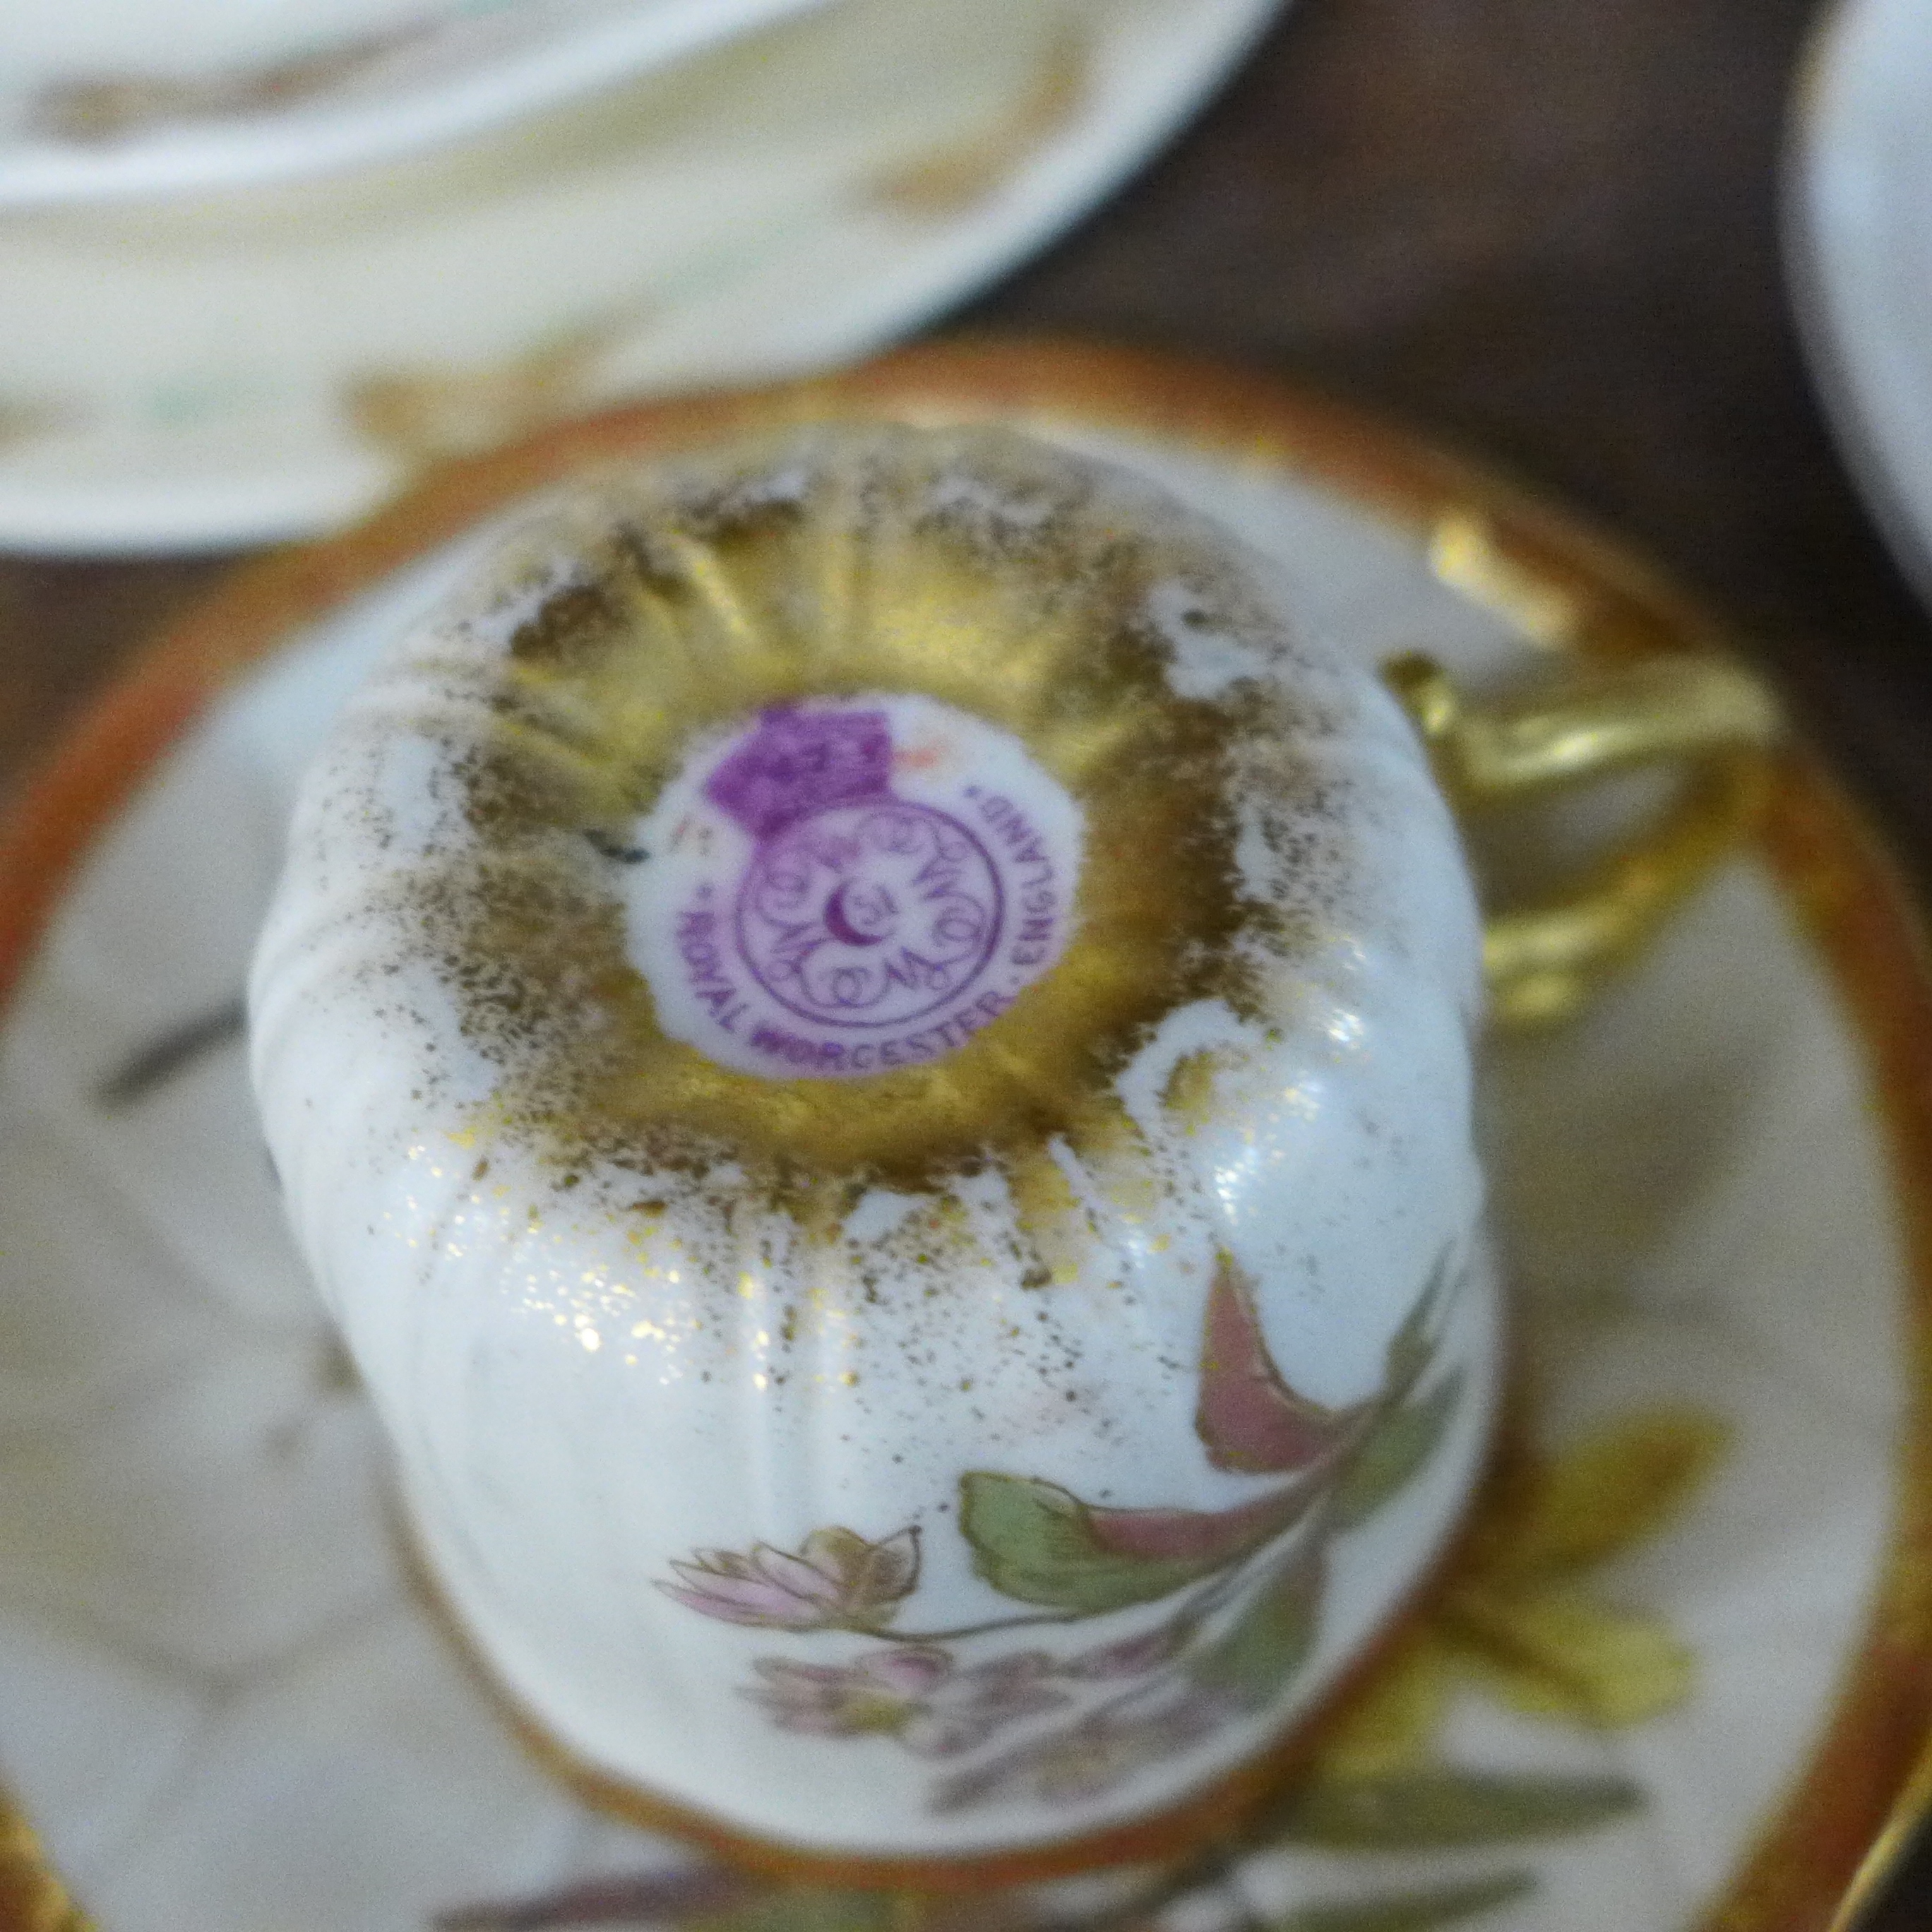 Royal Doulton Bunnykins bowl, dish, plate and mug, Spode, Wedgwood, Royal Copenhagen and Royal - Image 5 of 7